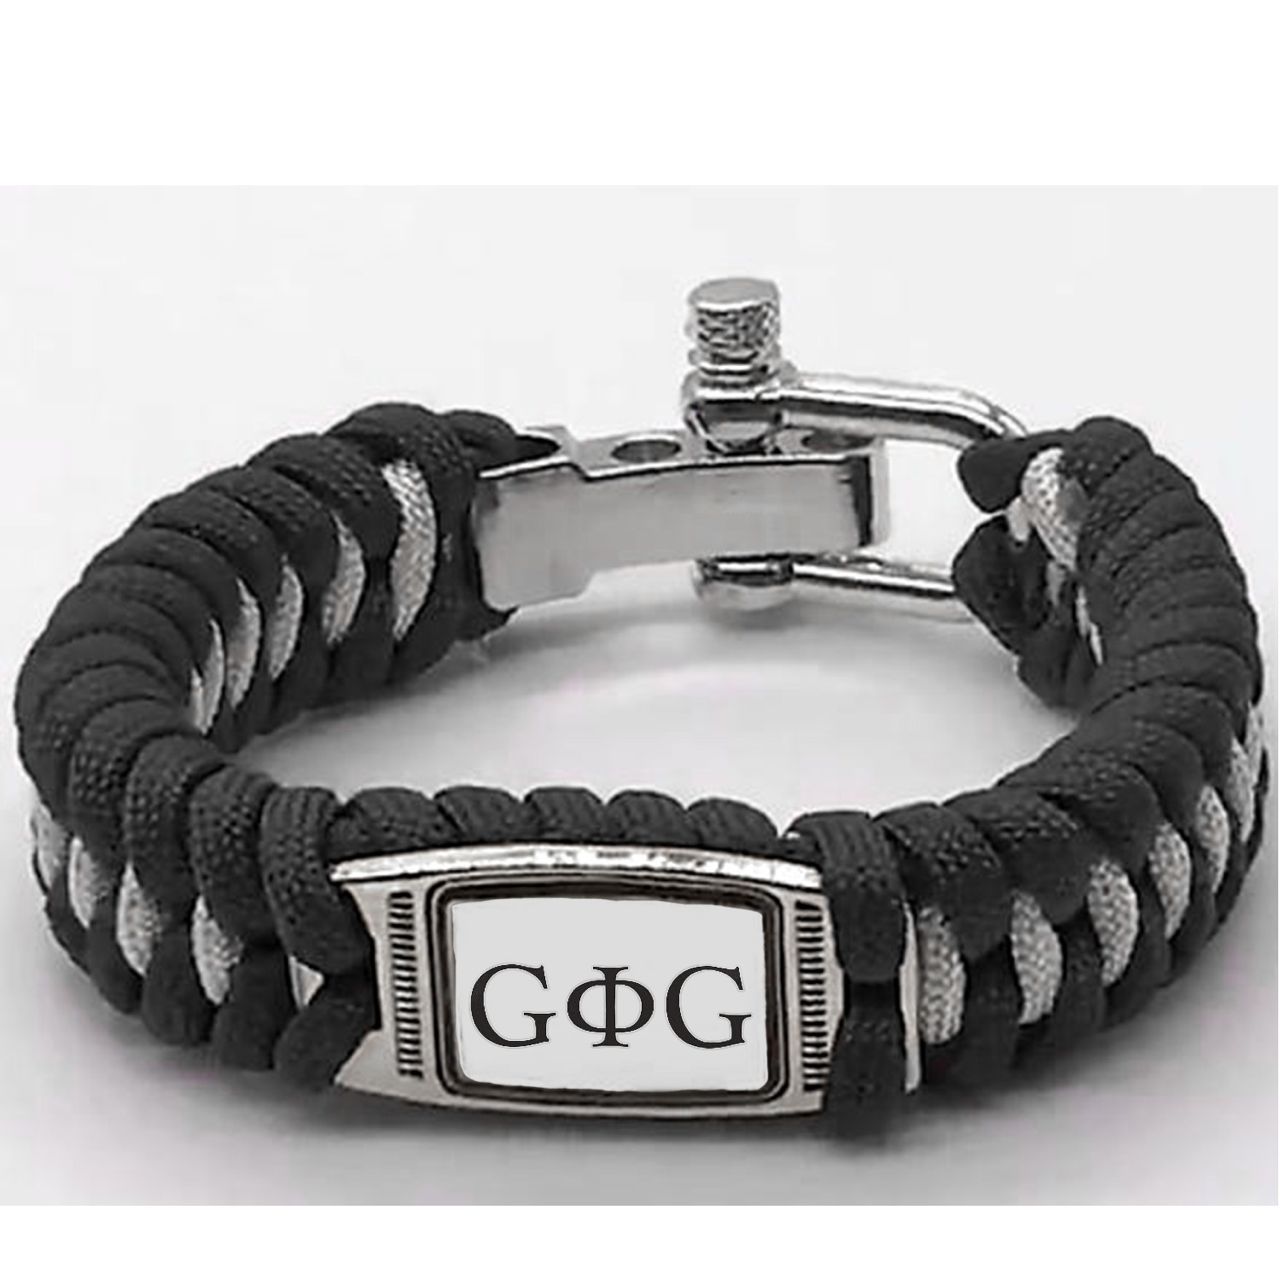 Groove Phi Groove Woven Bracelet